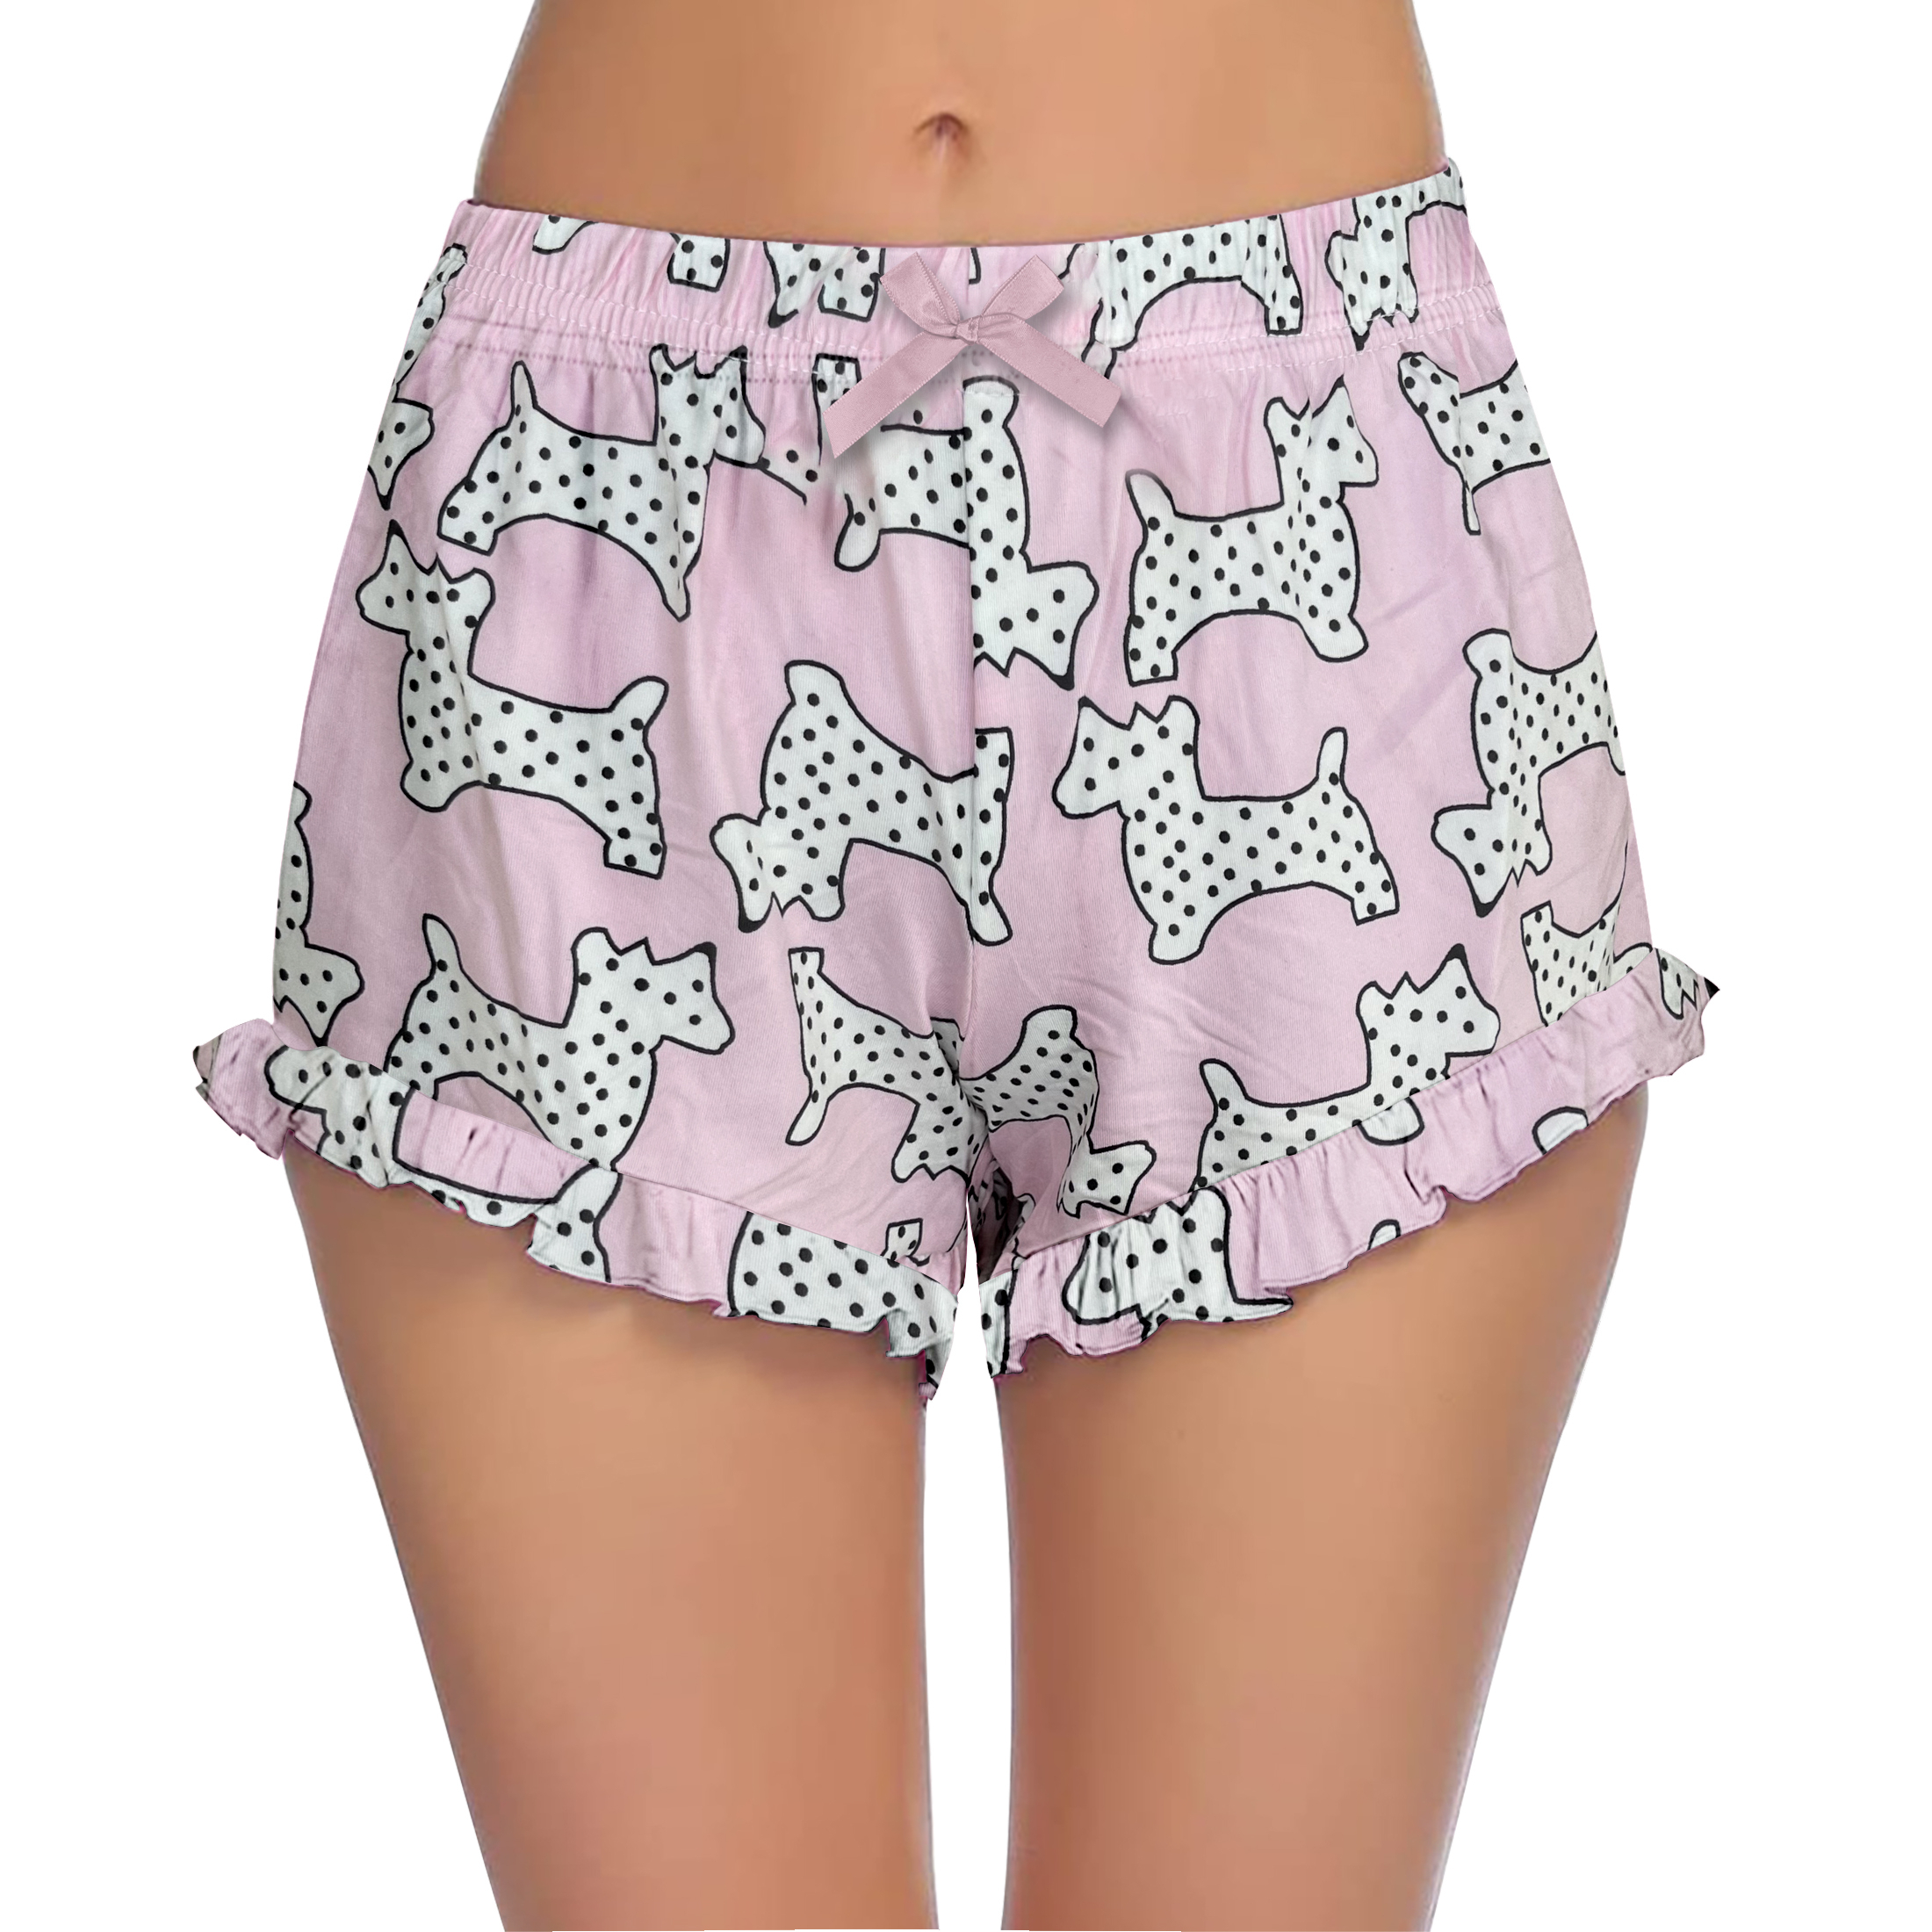 Women's Soft Printed Pajama Shorts W/ Ruffled Hem For Sleepwear - Small